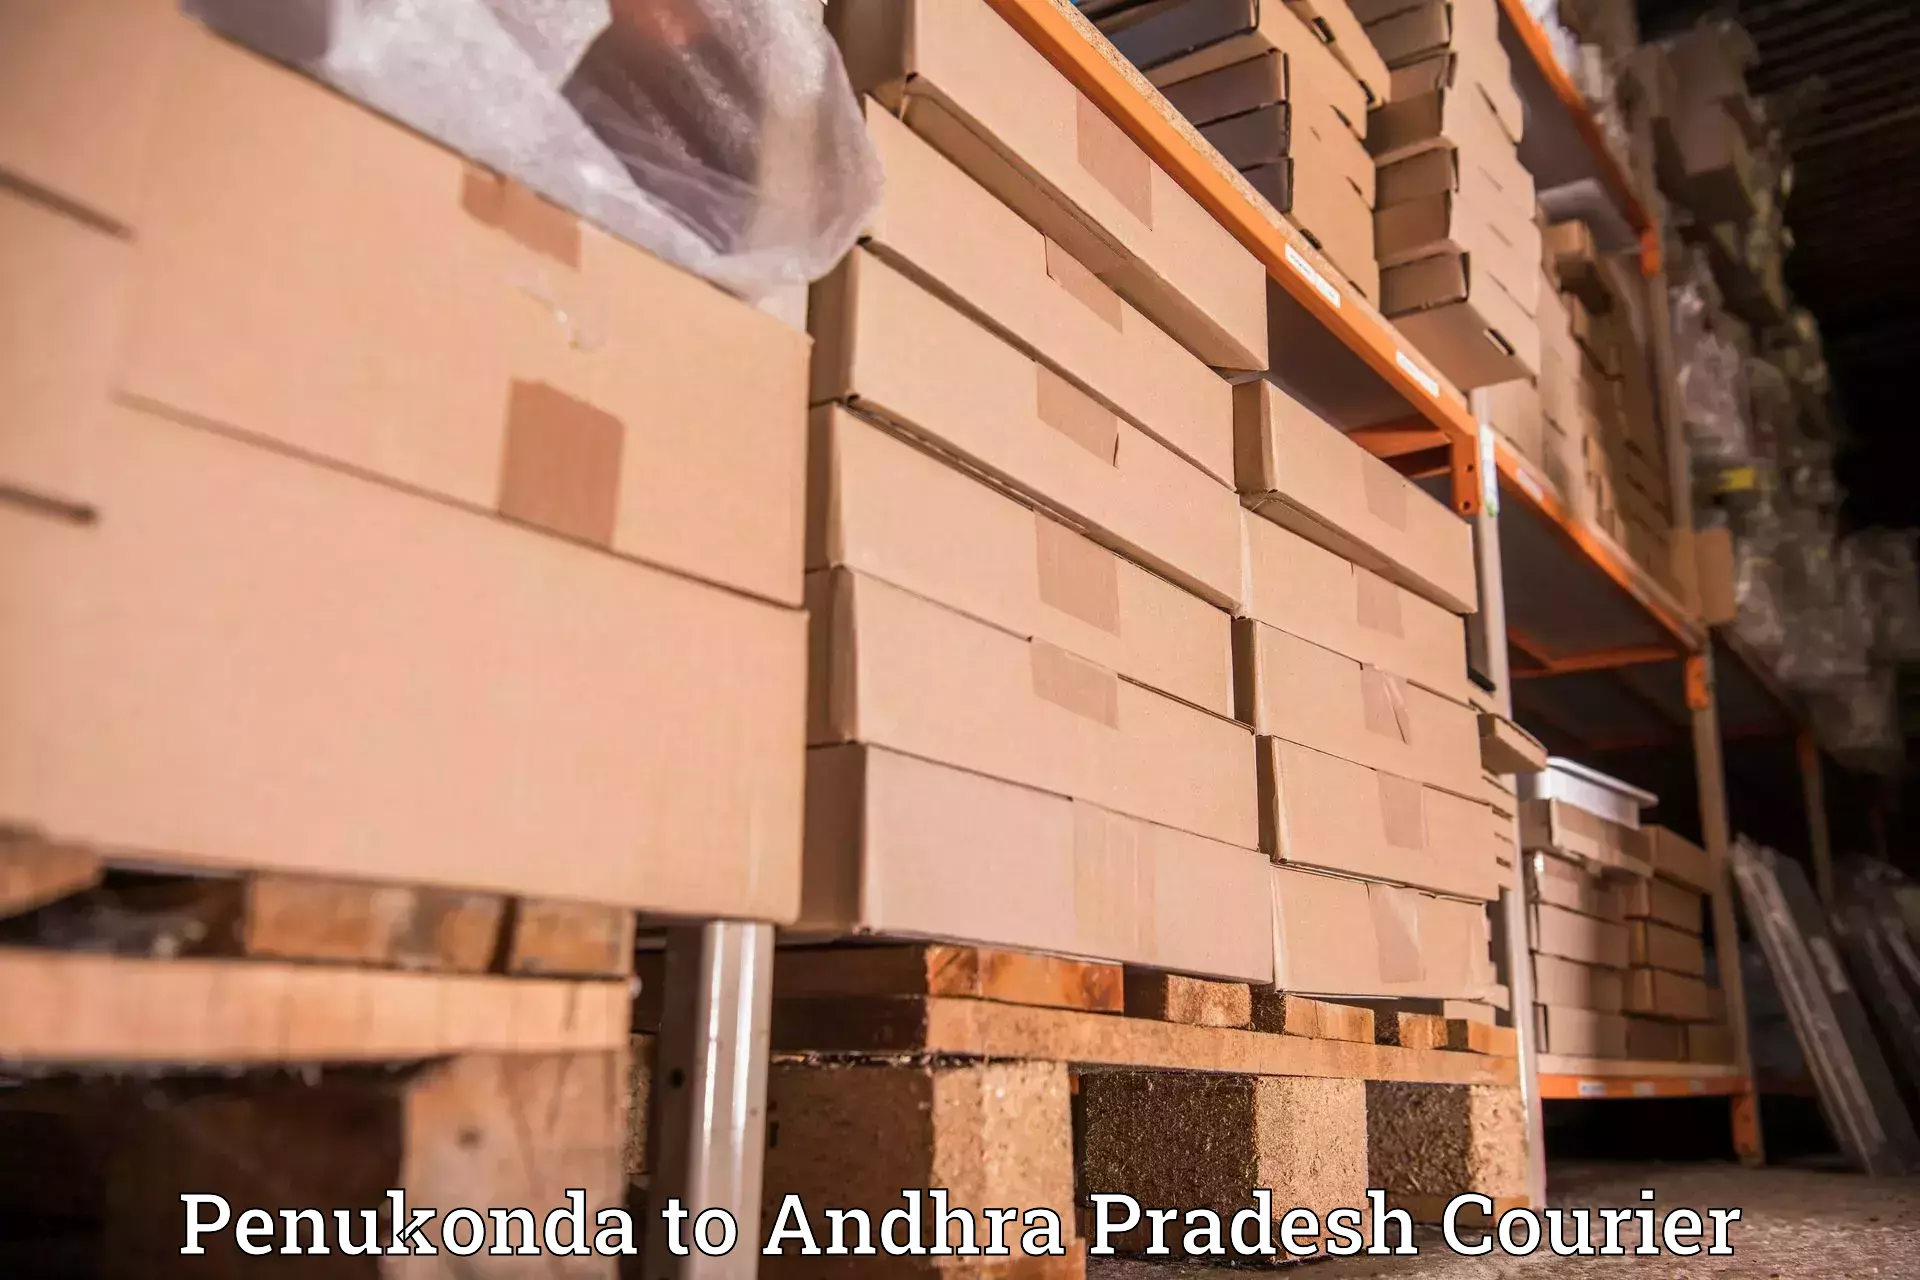 Modern delivery technologies in Penukonda to Konduru